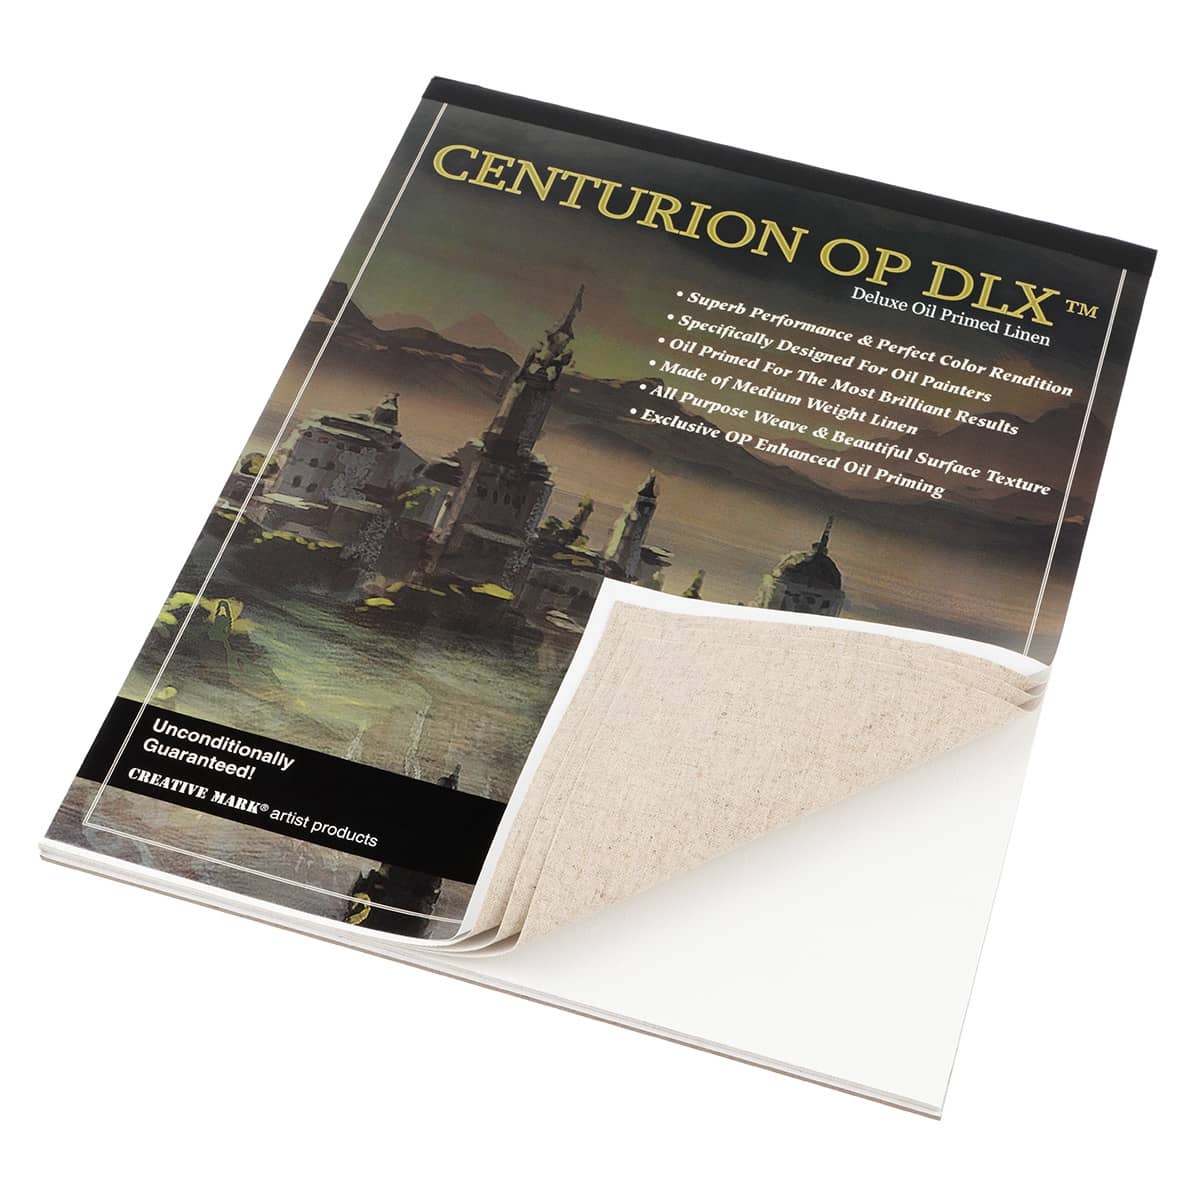 Deluxe Professional Oil Primed Linen Pads Centurion